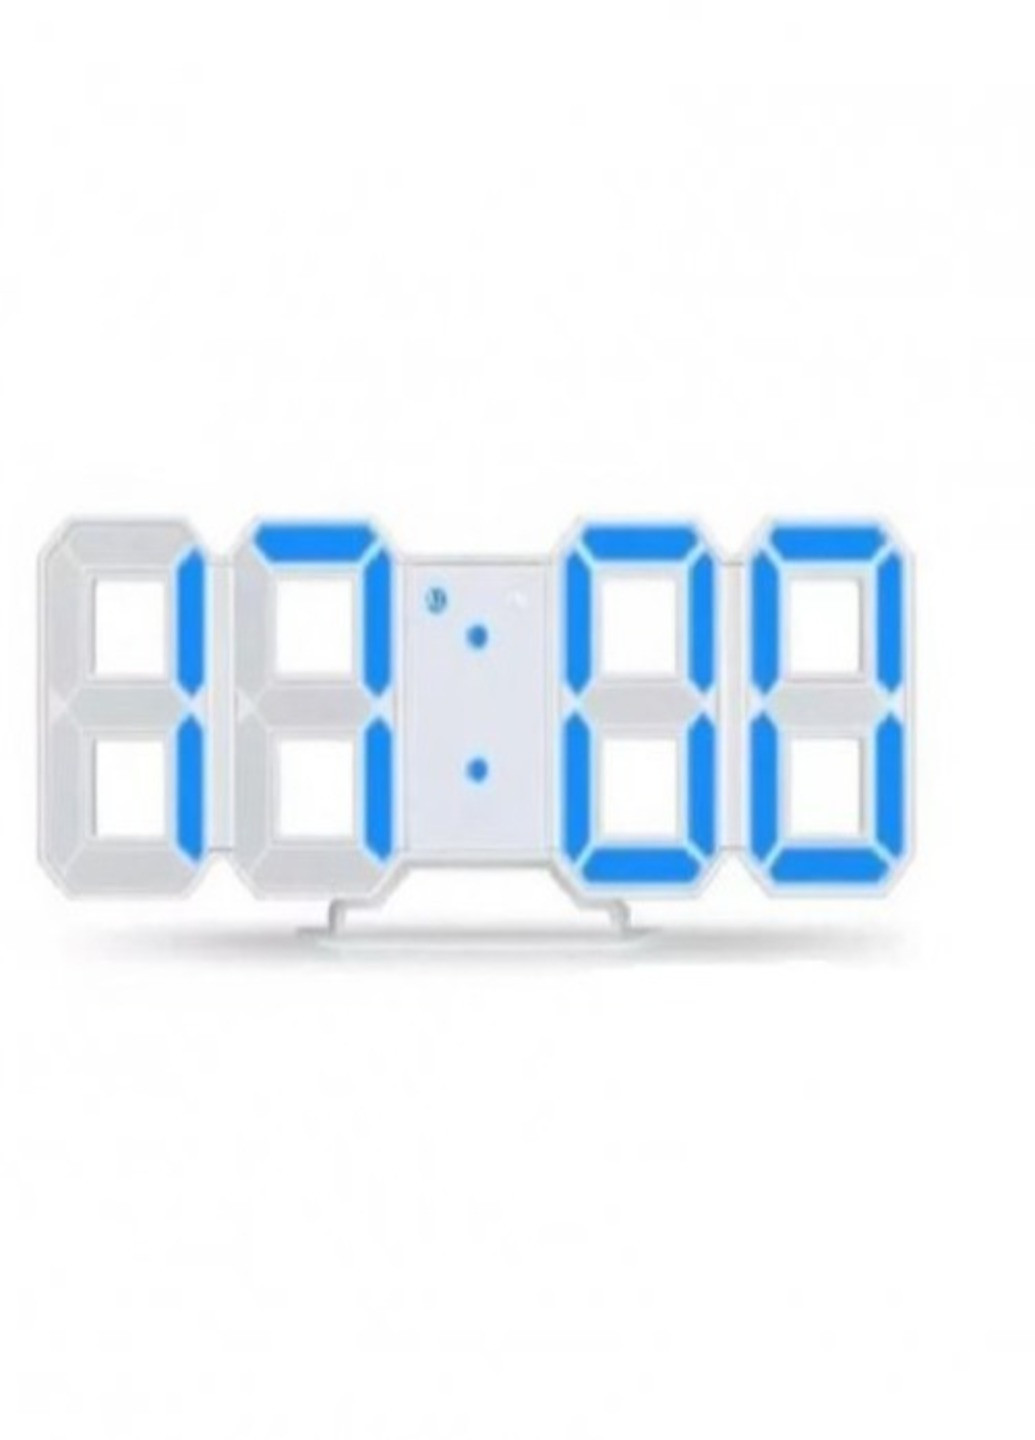 Электронные часы настольные LY 1089 с синей подсветкой VST (253020909)